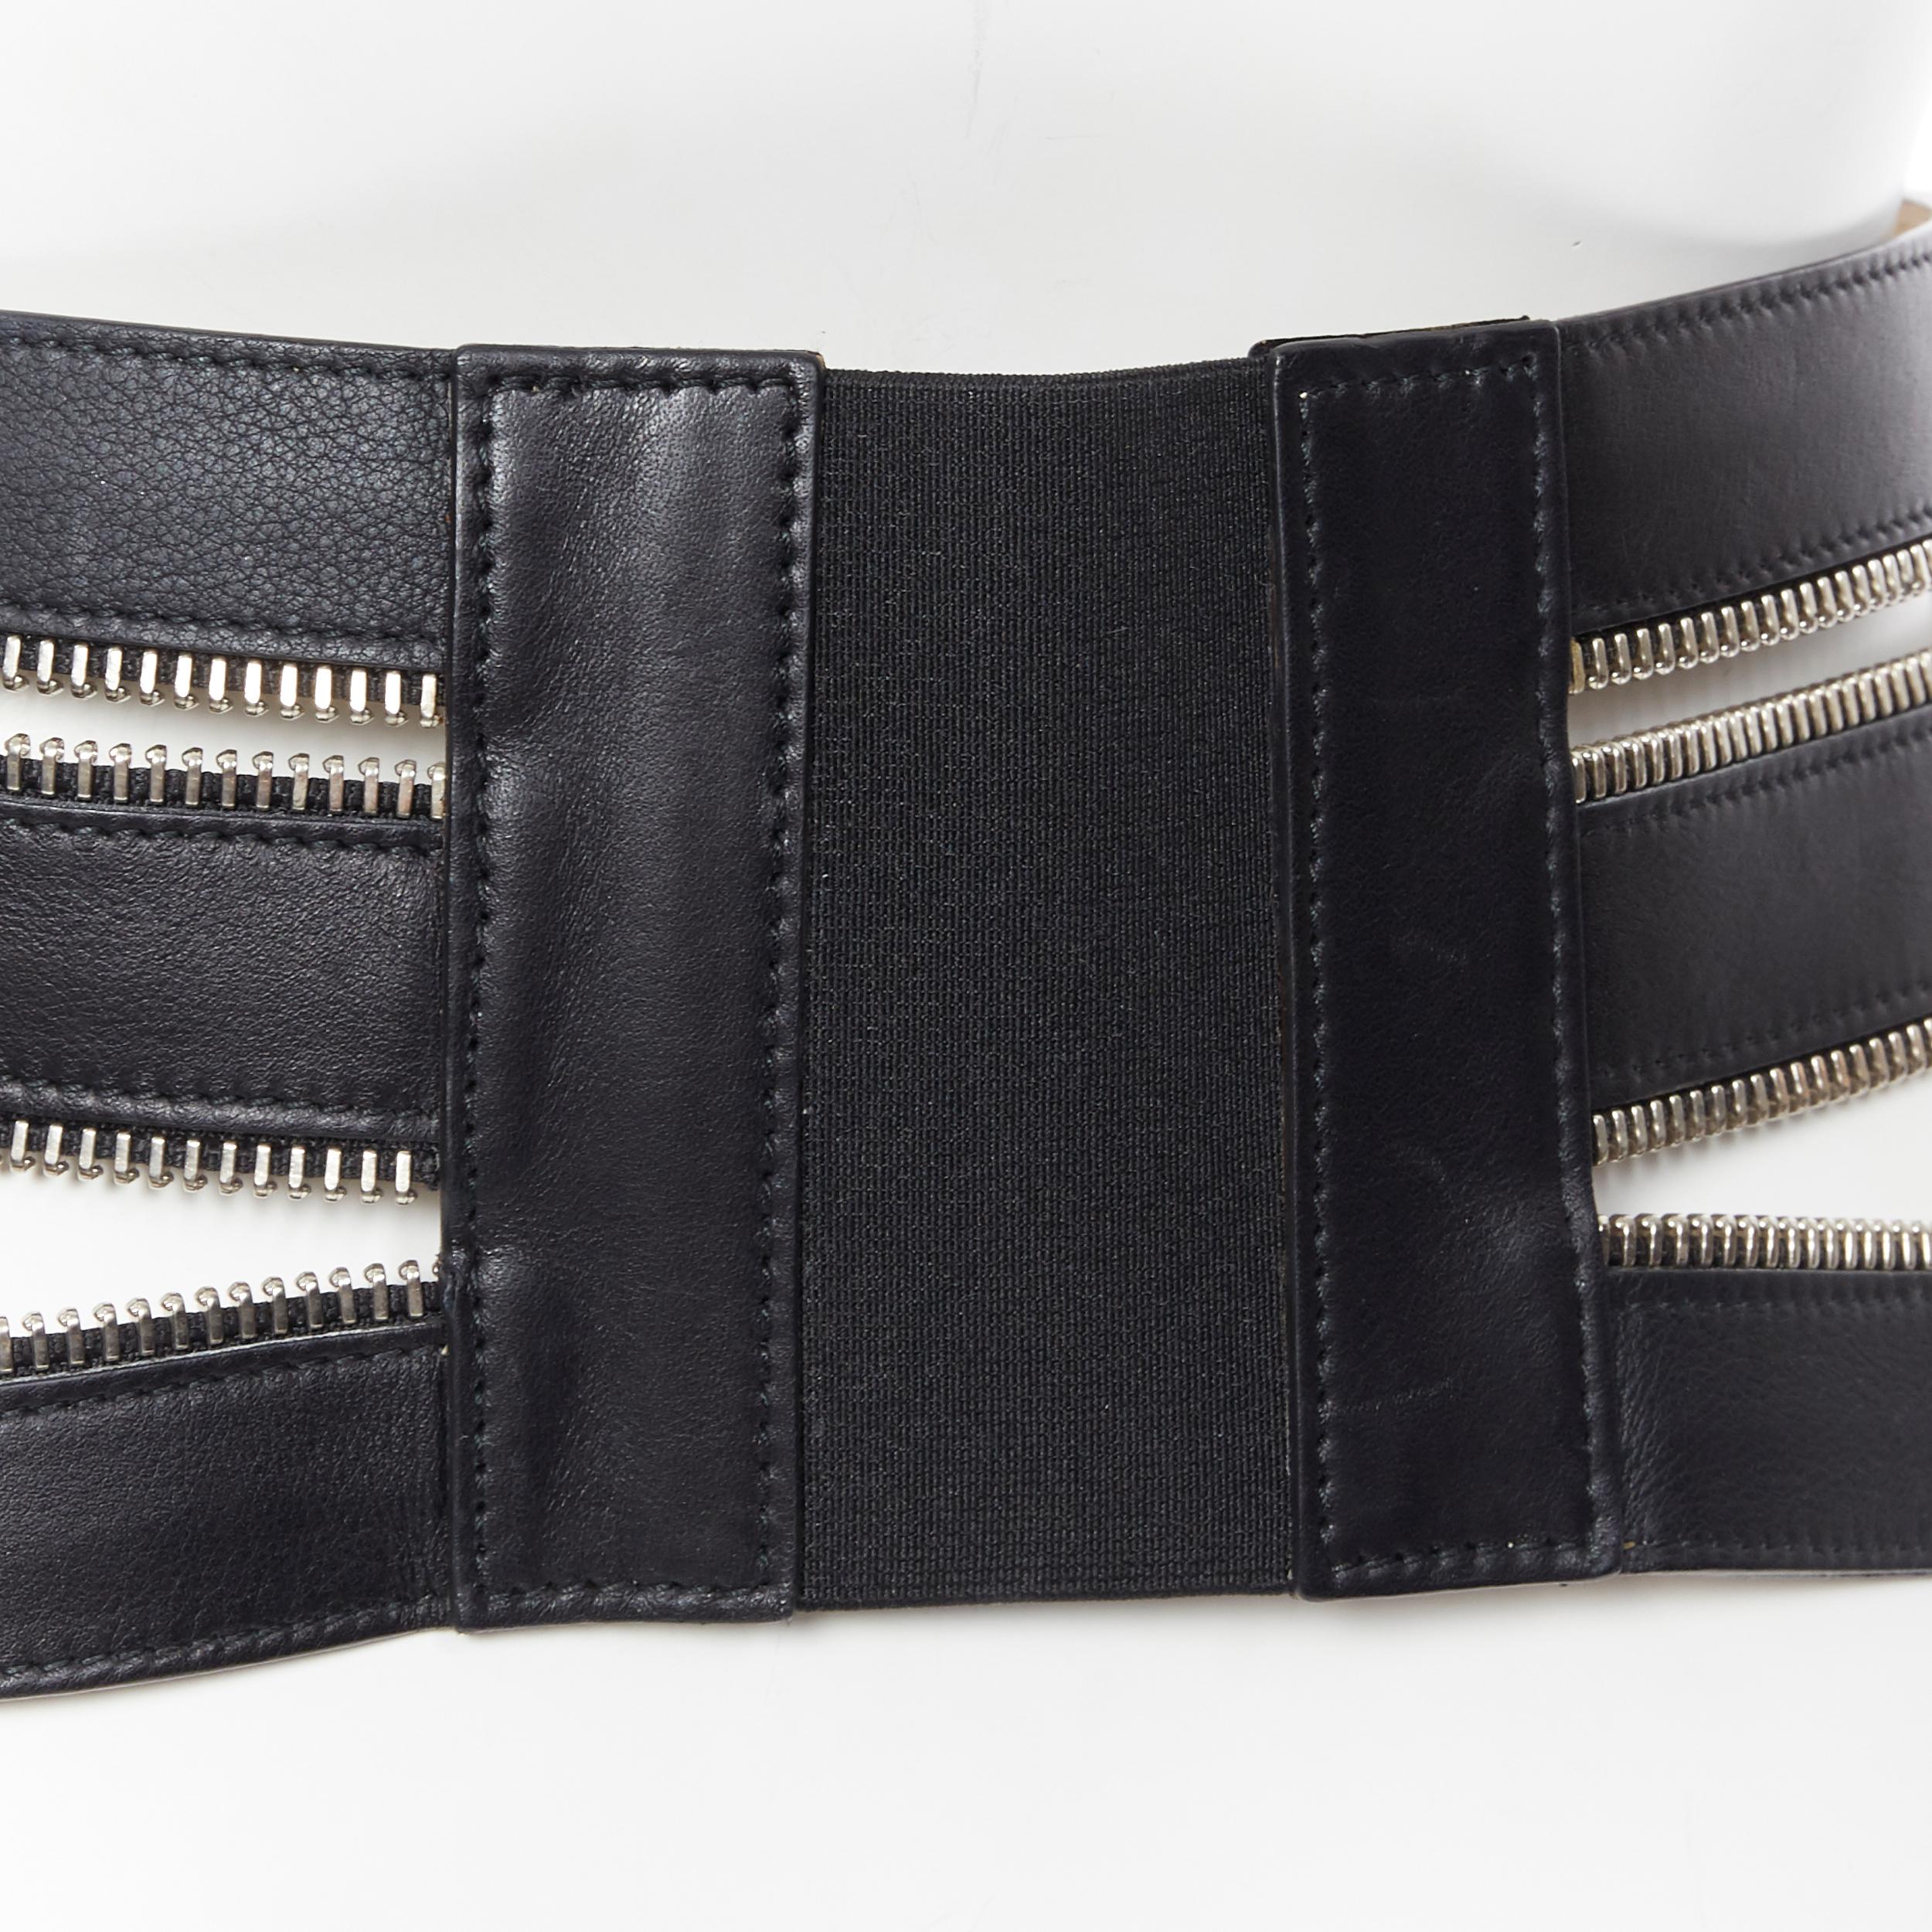 JEAN PAUL GAULTIER black leather elasticated zipper detail caged corset belt S 4